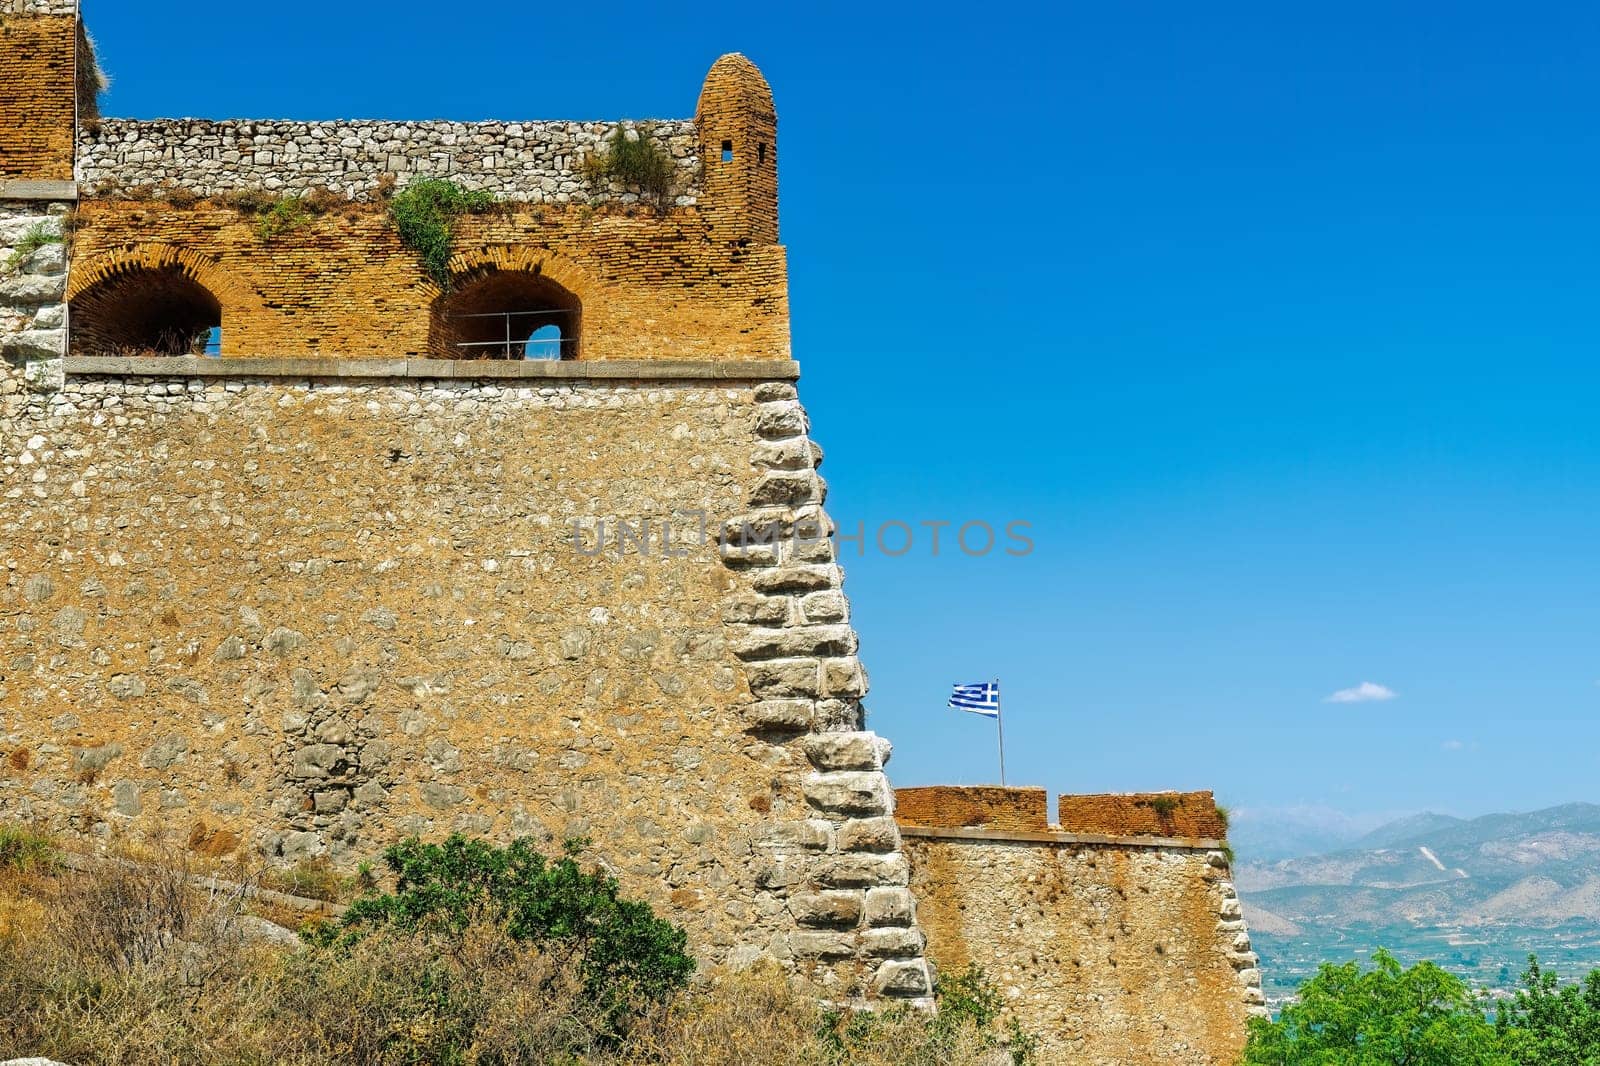 Nafplio, Greece Palamidi fortress bastions Miltiadis and Leonidas with a Greek flag waving against a blue sky.